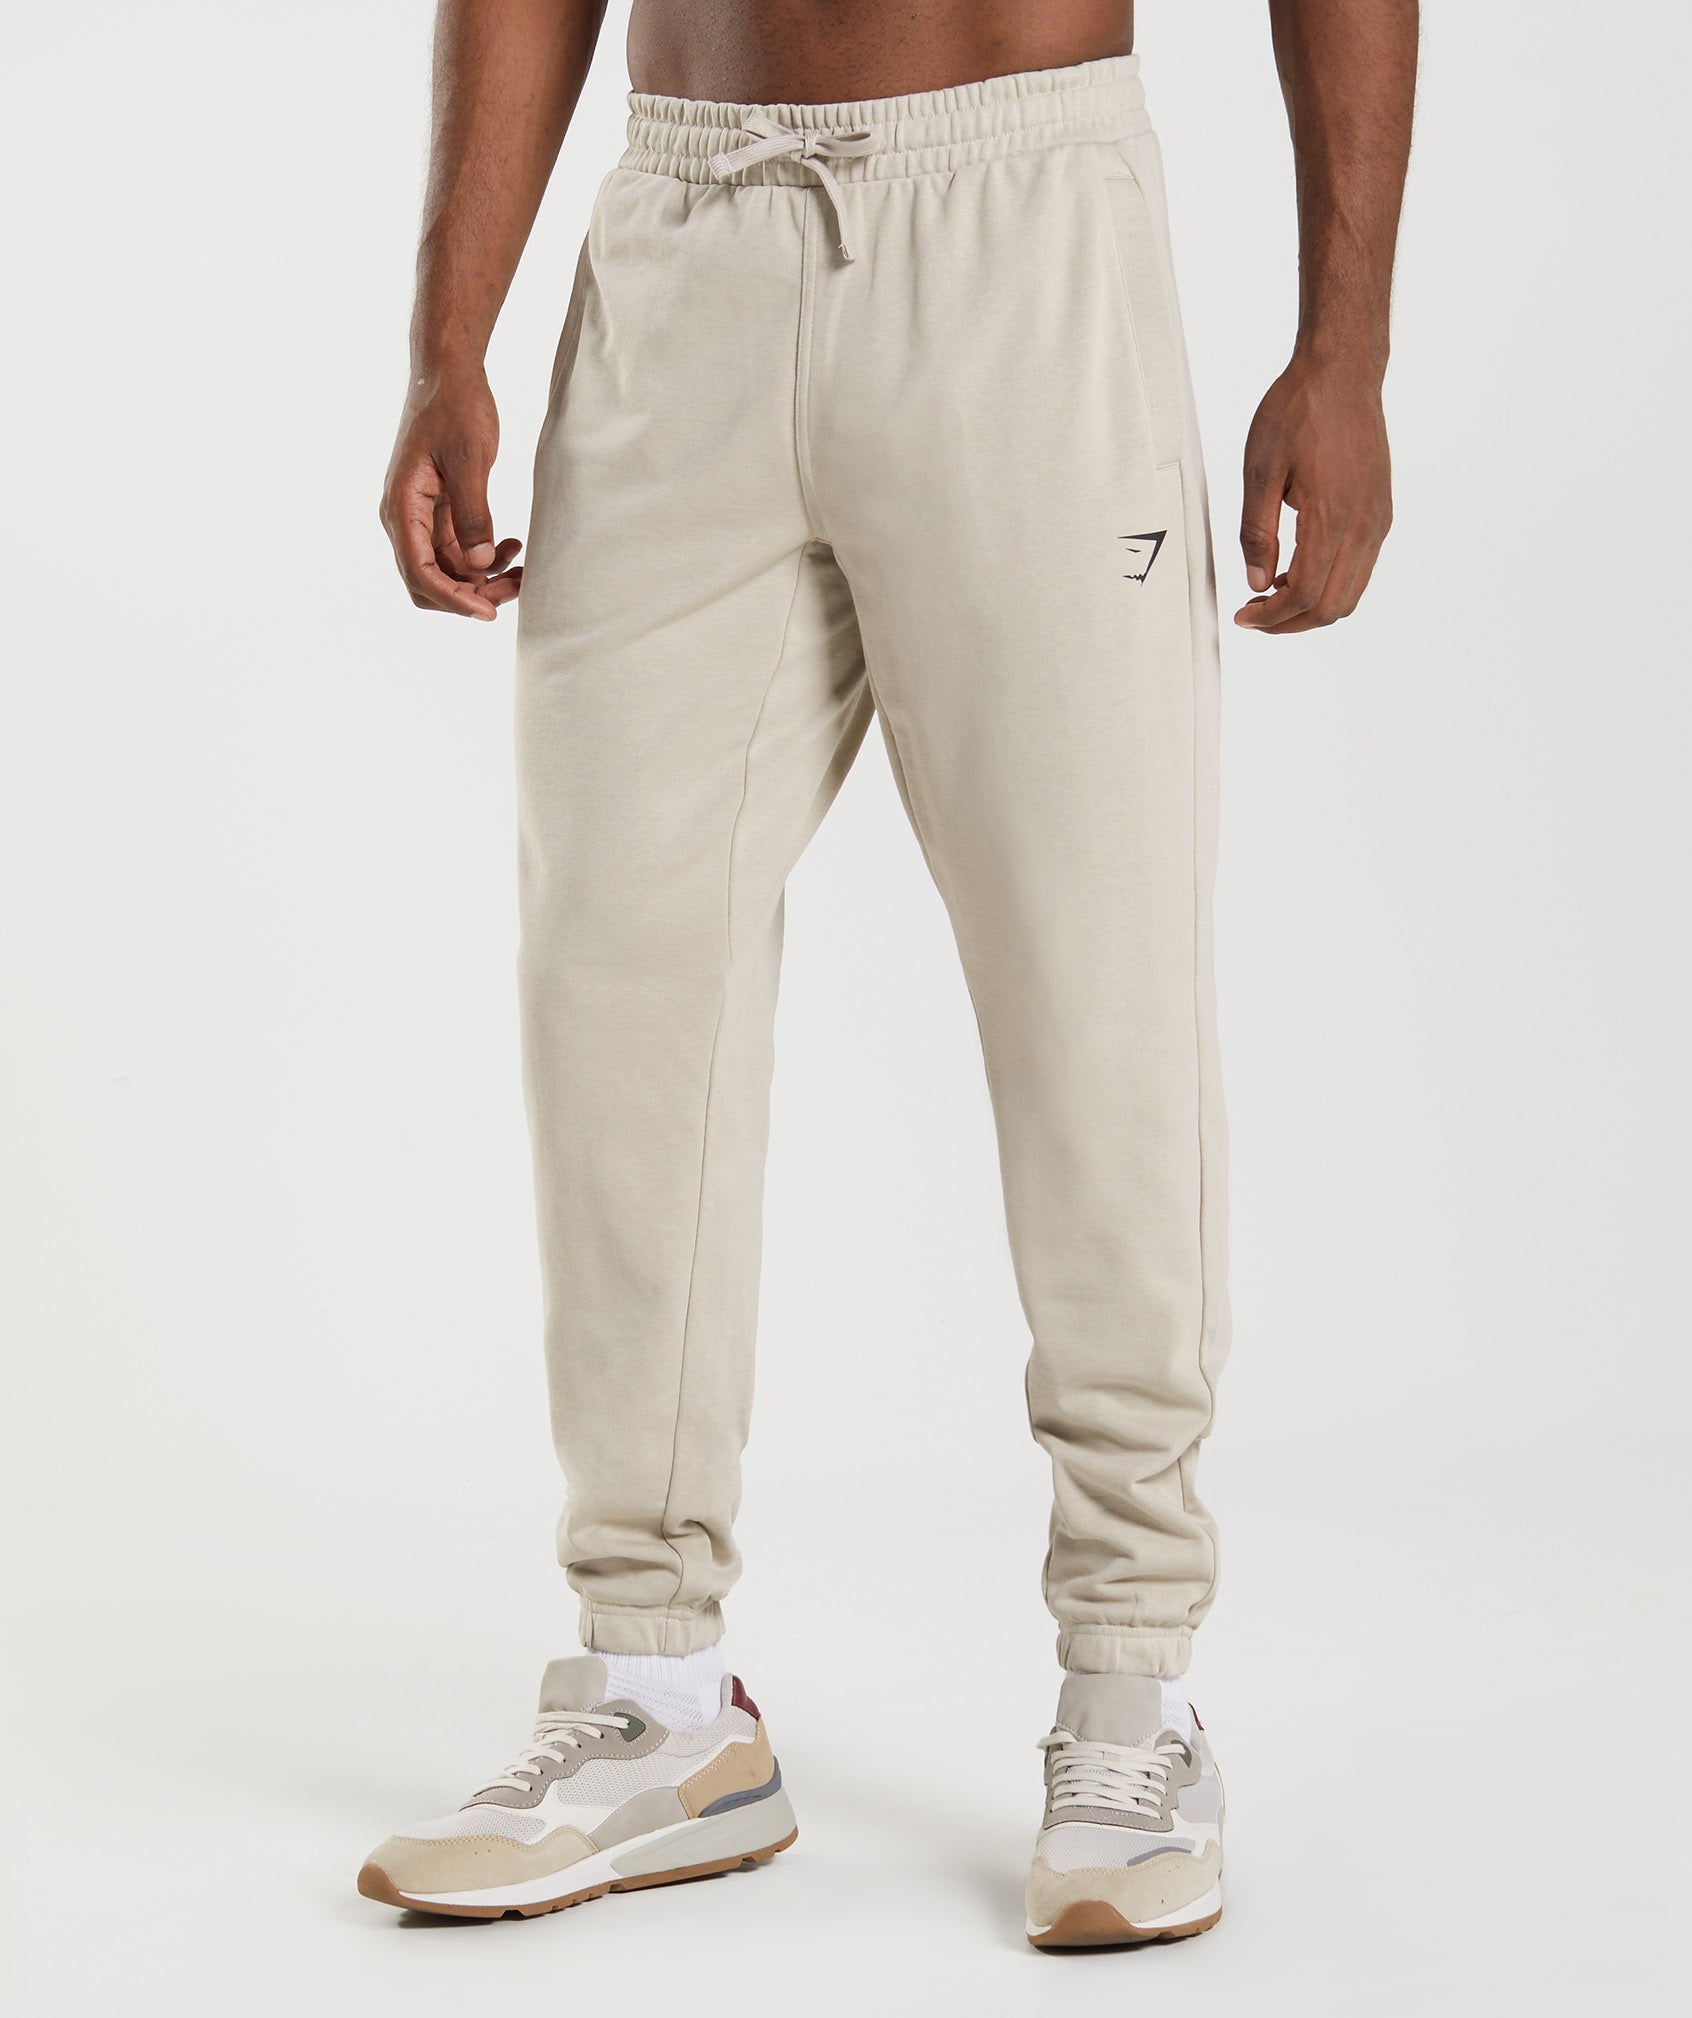 Gubotare Sweat Pants For Man Men's Track Pants,Slim Fit Sweatpants Joggers  with Zipper Pockets,Black 4XL 